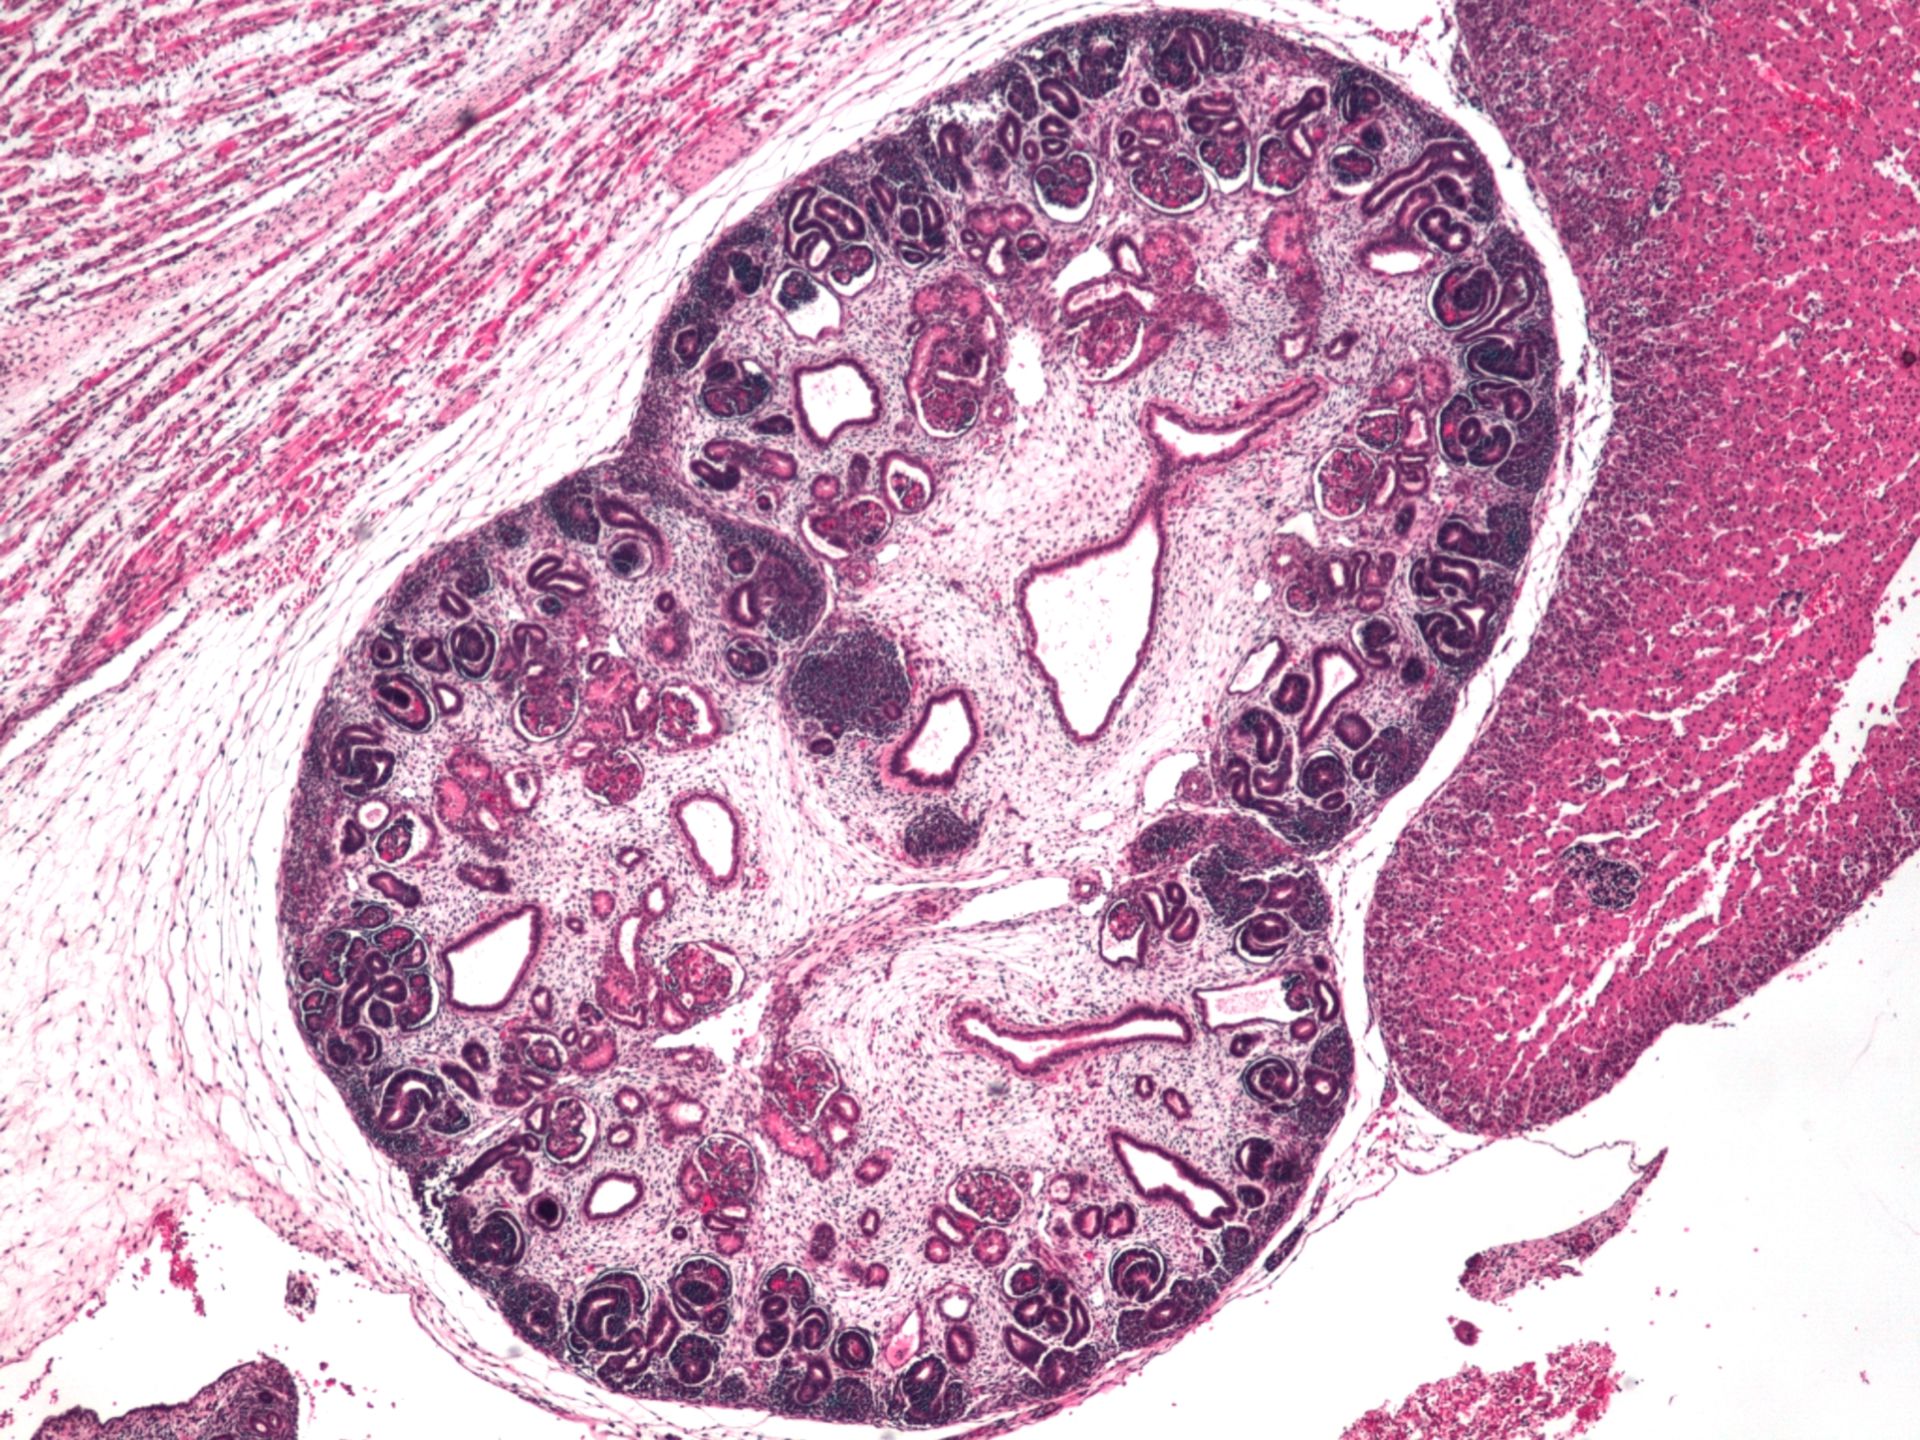 Human kidney (embryo)